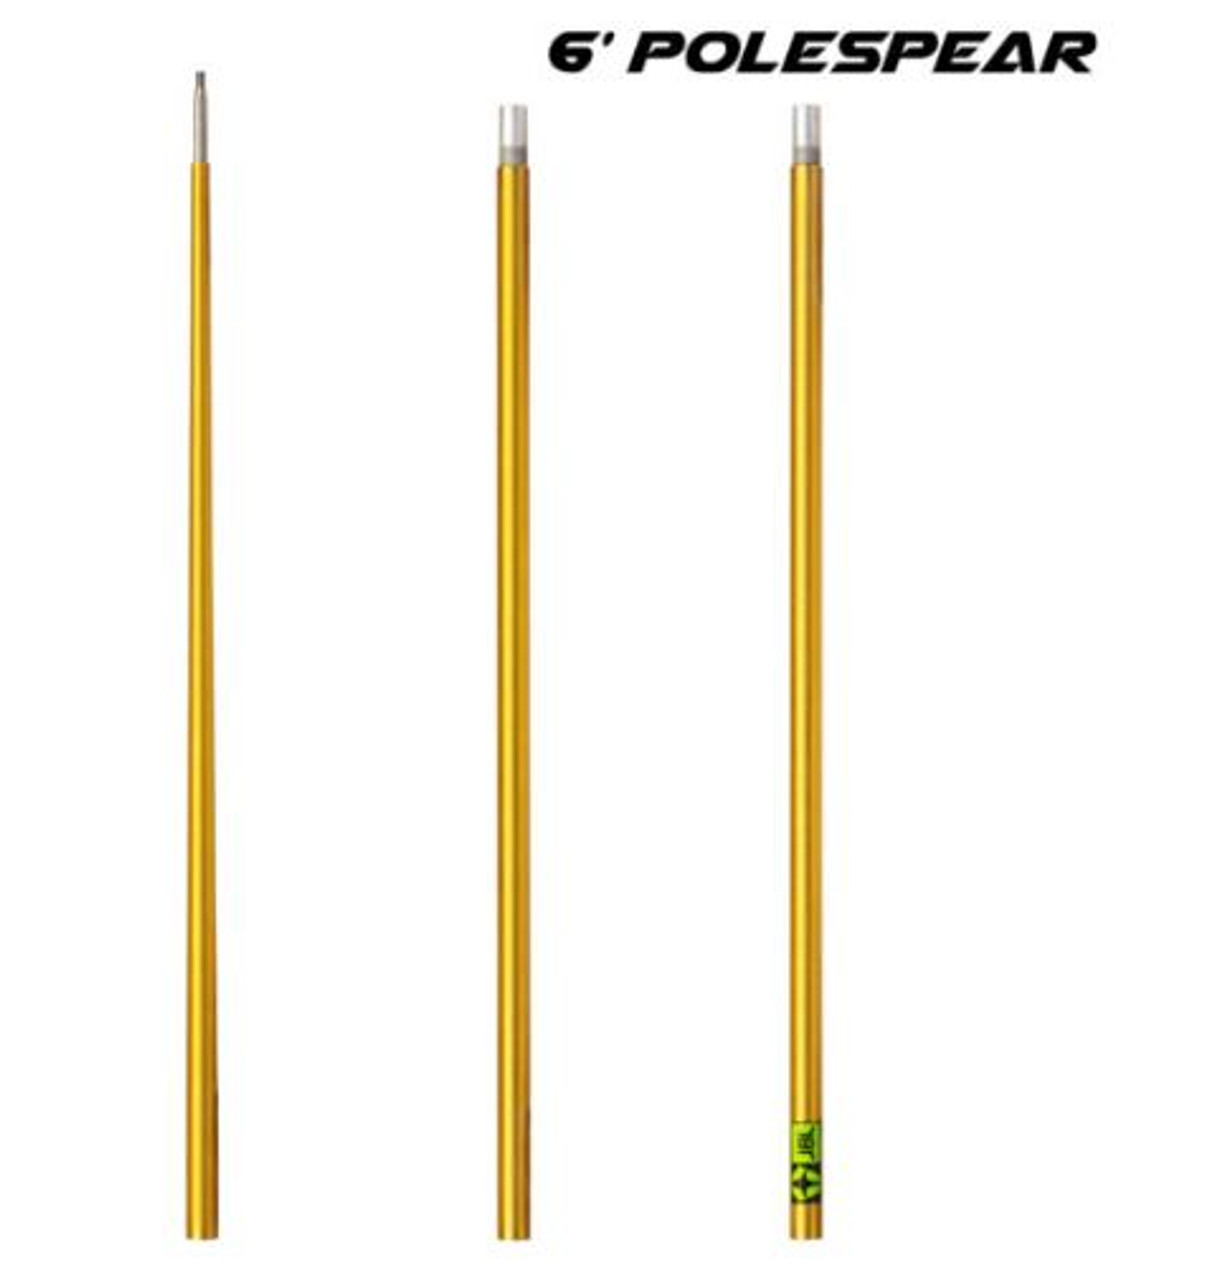 Travel Polespear  Scuba Gear Canada